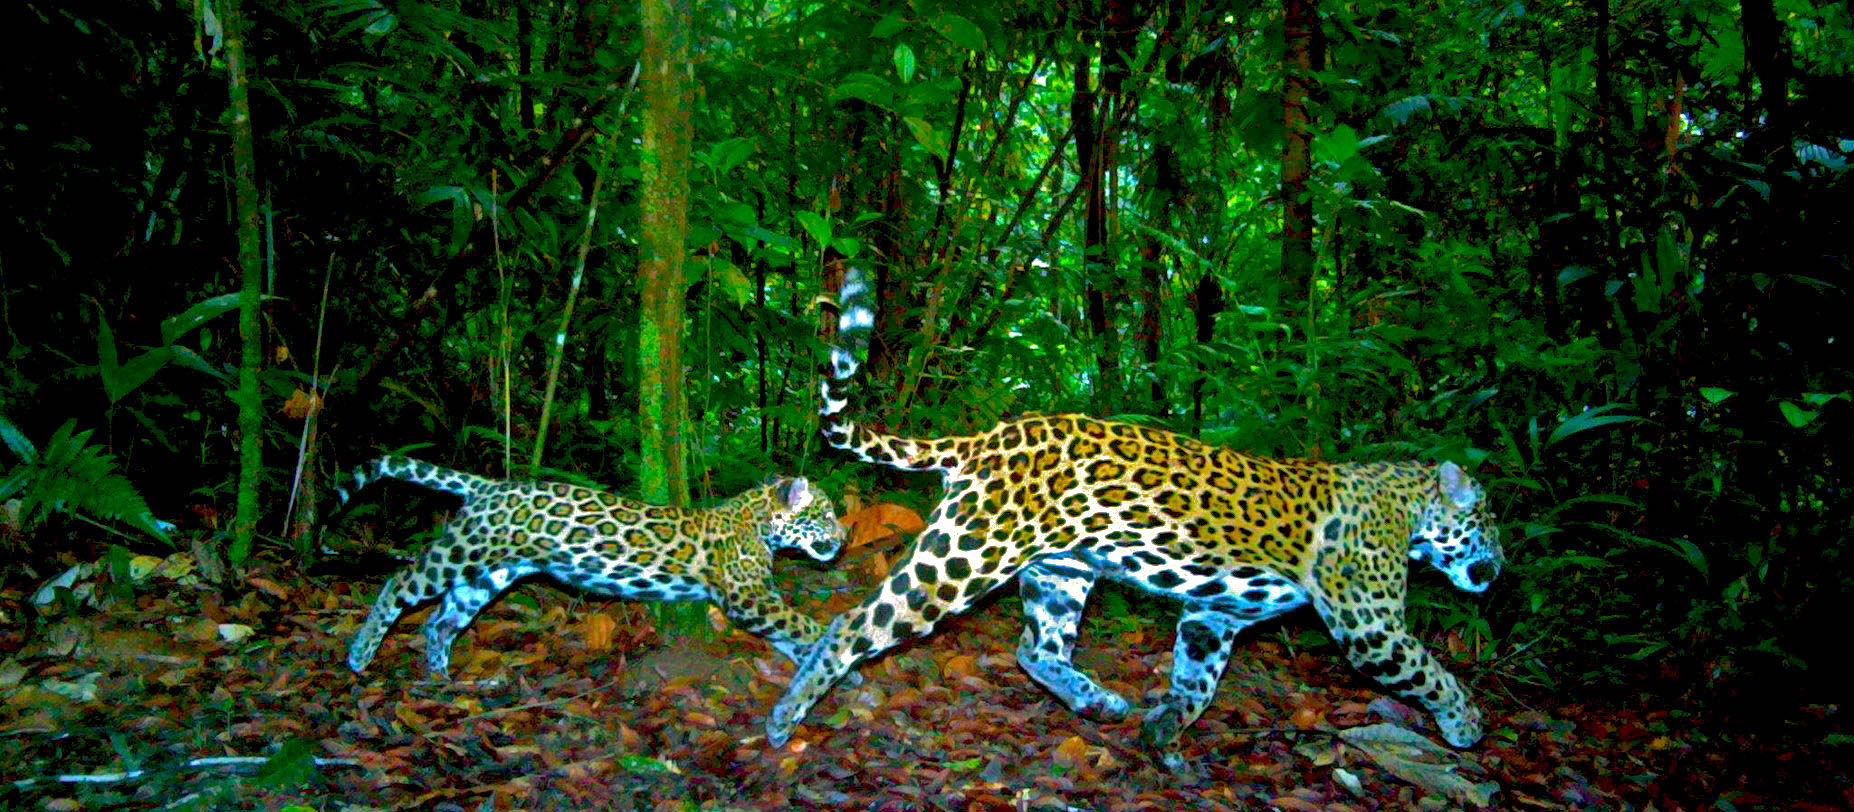 Jaguar and cub at Bocawina 